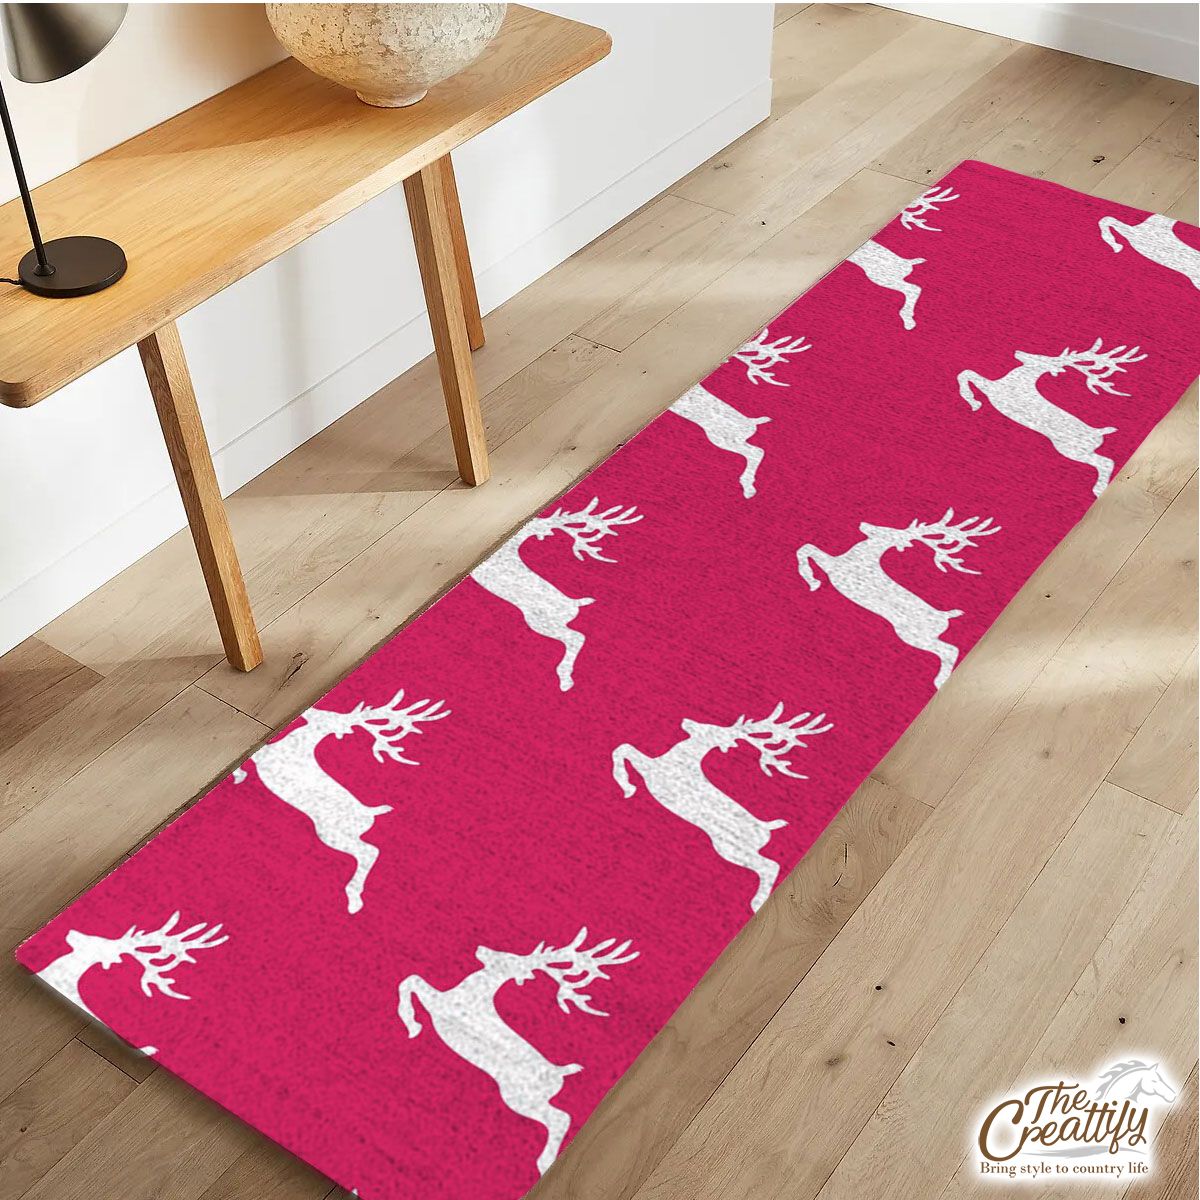 Pink And White Christmas Reindeeer Runner Carpet